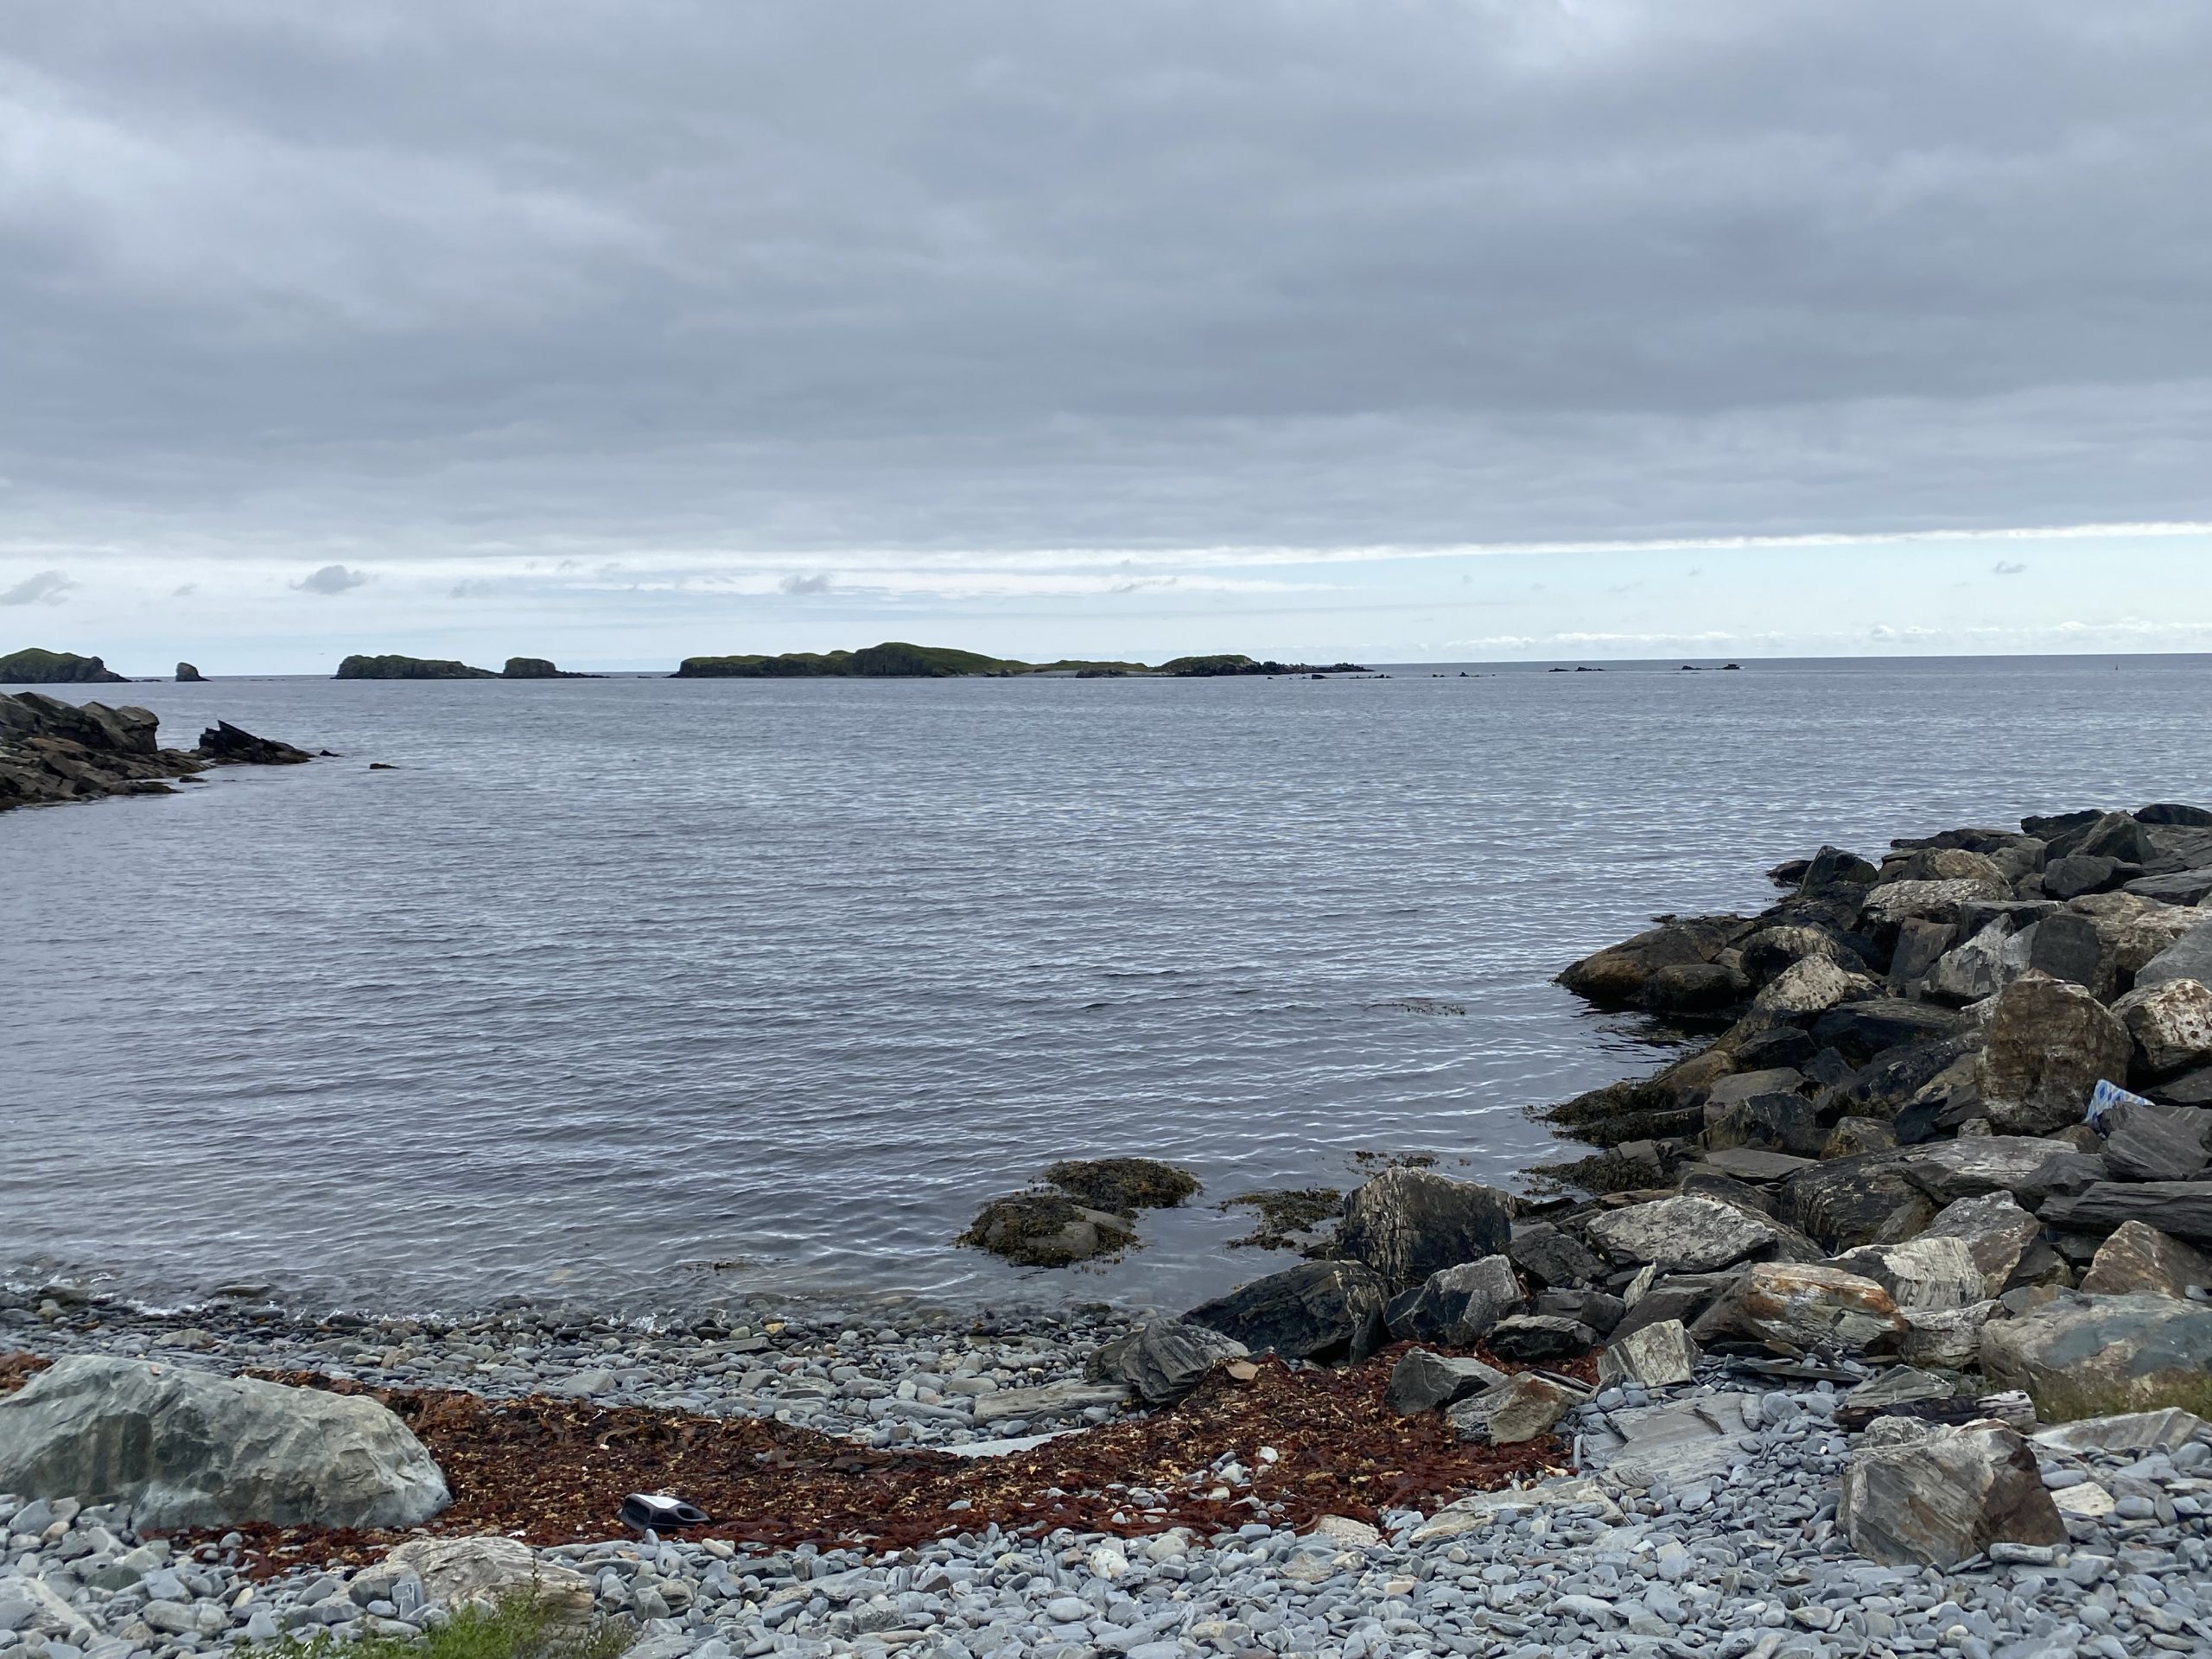 The rocky coast at Melrose on the Bonavista Peninsula in Newfoundland.